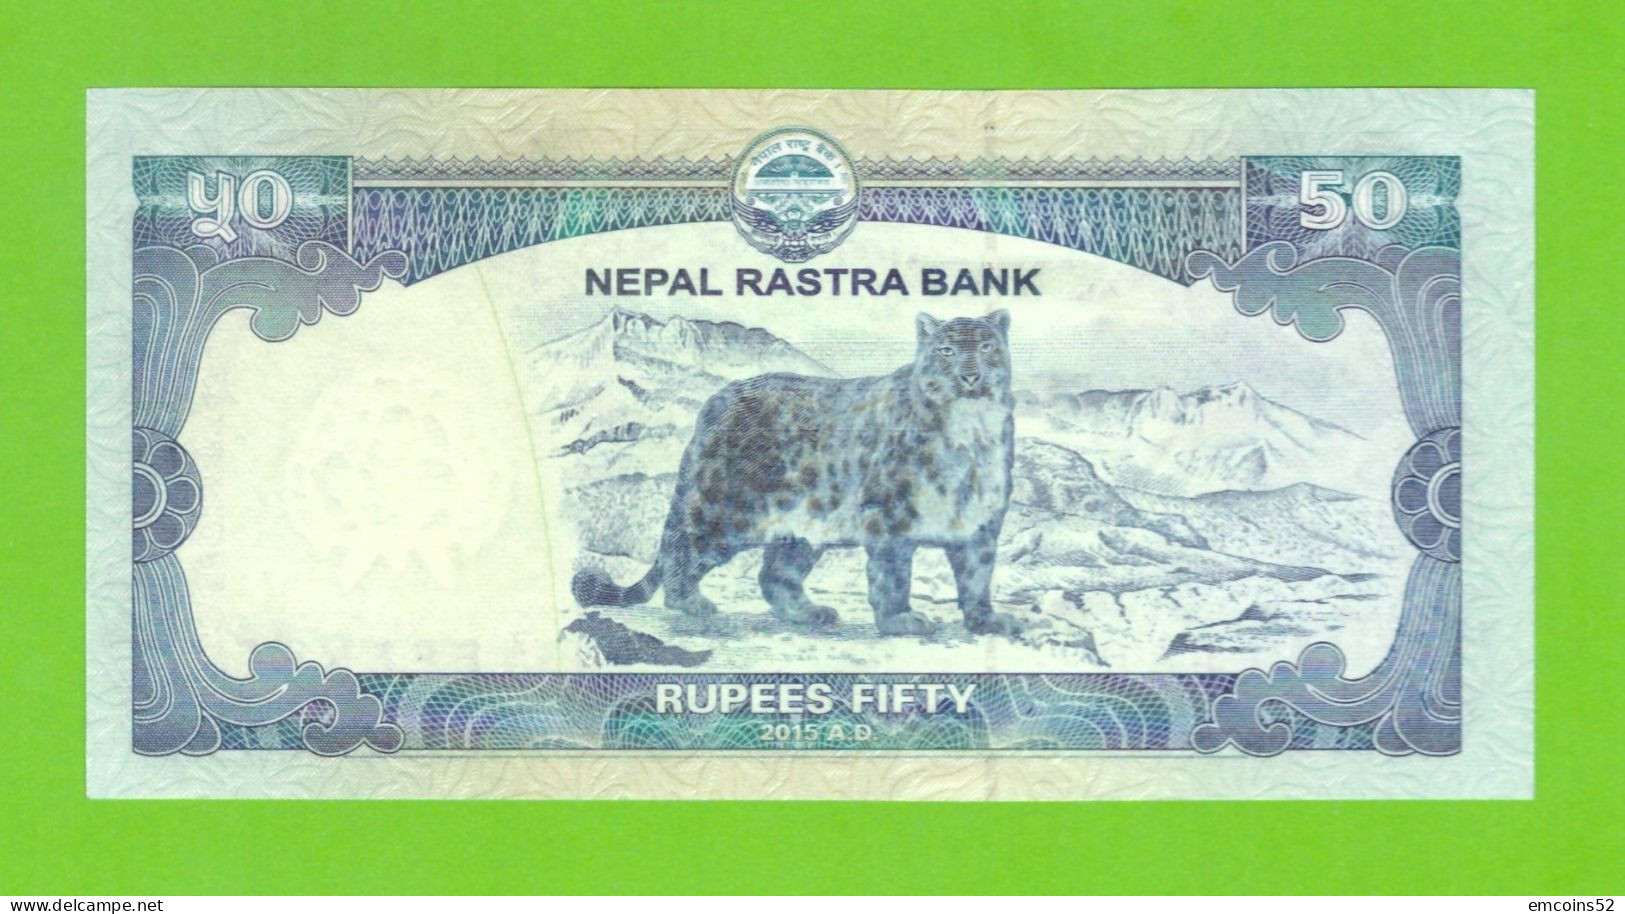 NEPAL 50 RUPEE 2015 P-79 UNC - Nepal